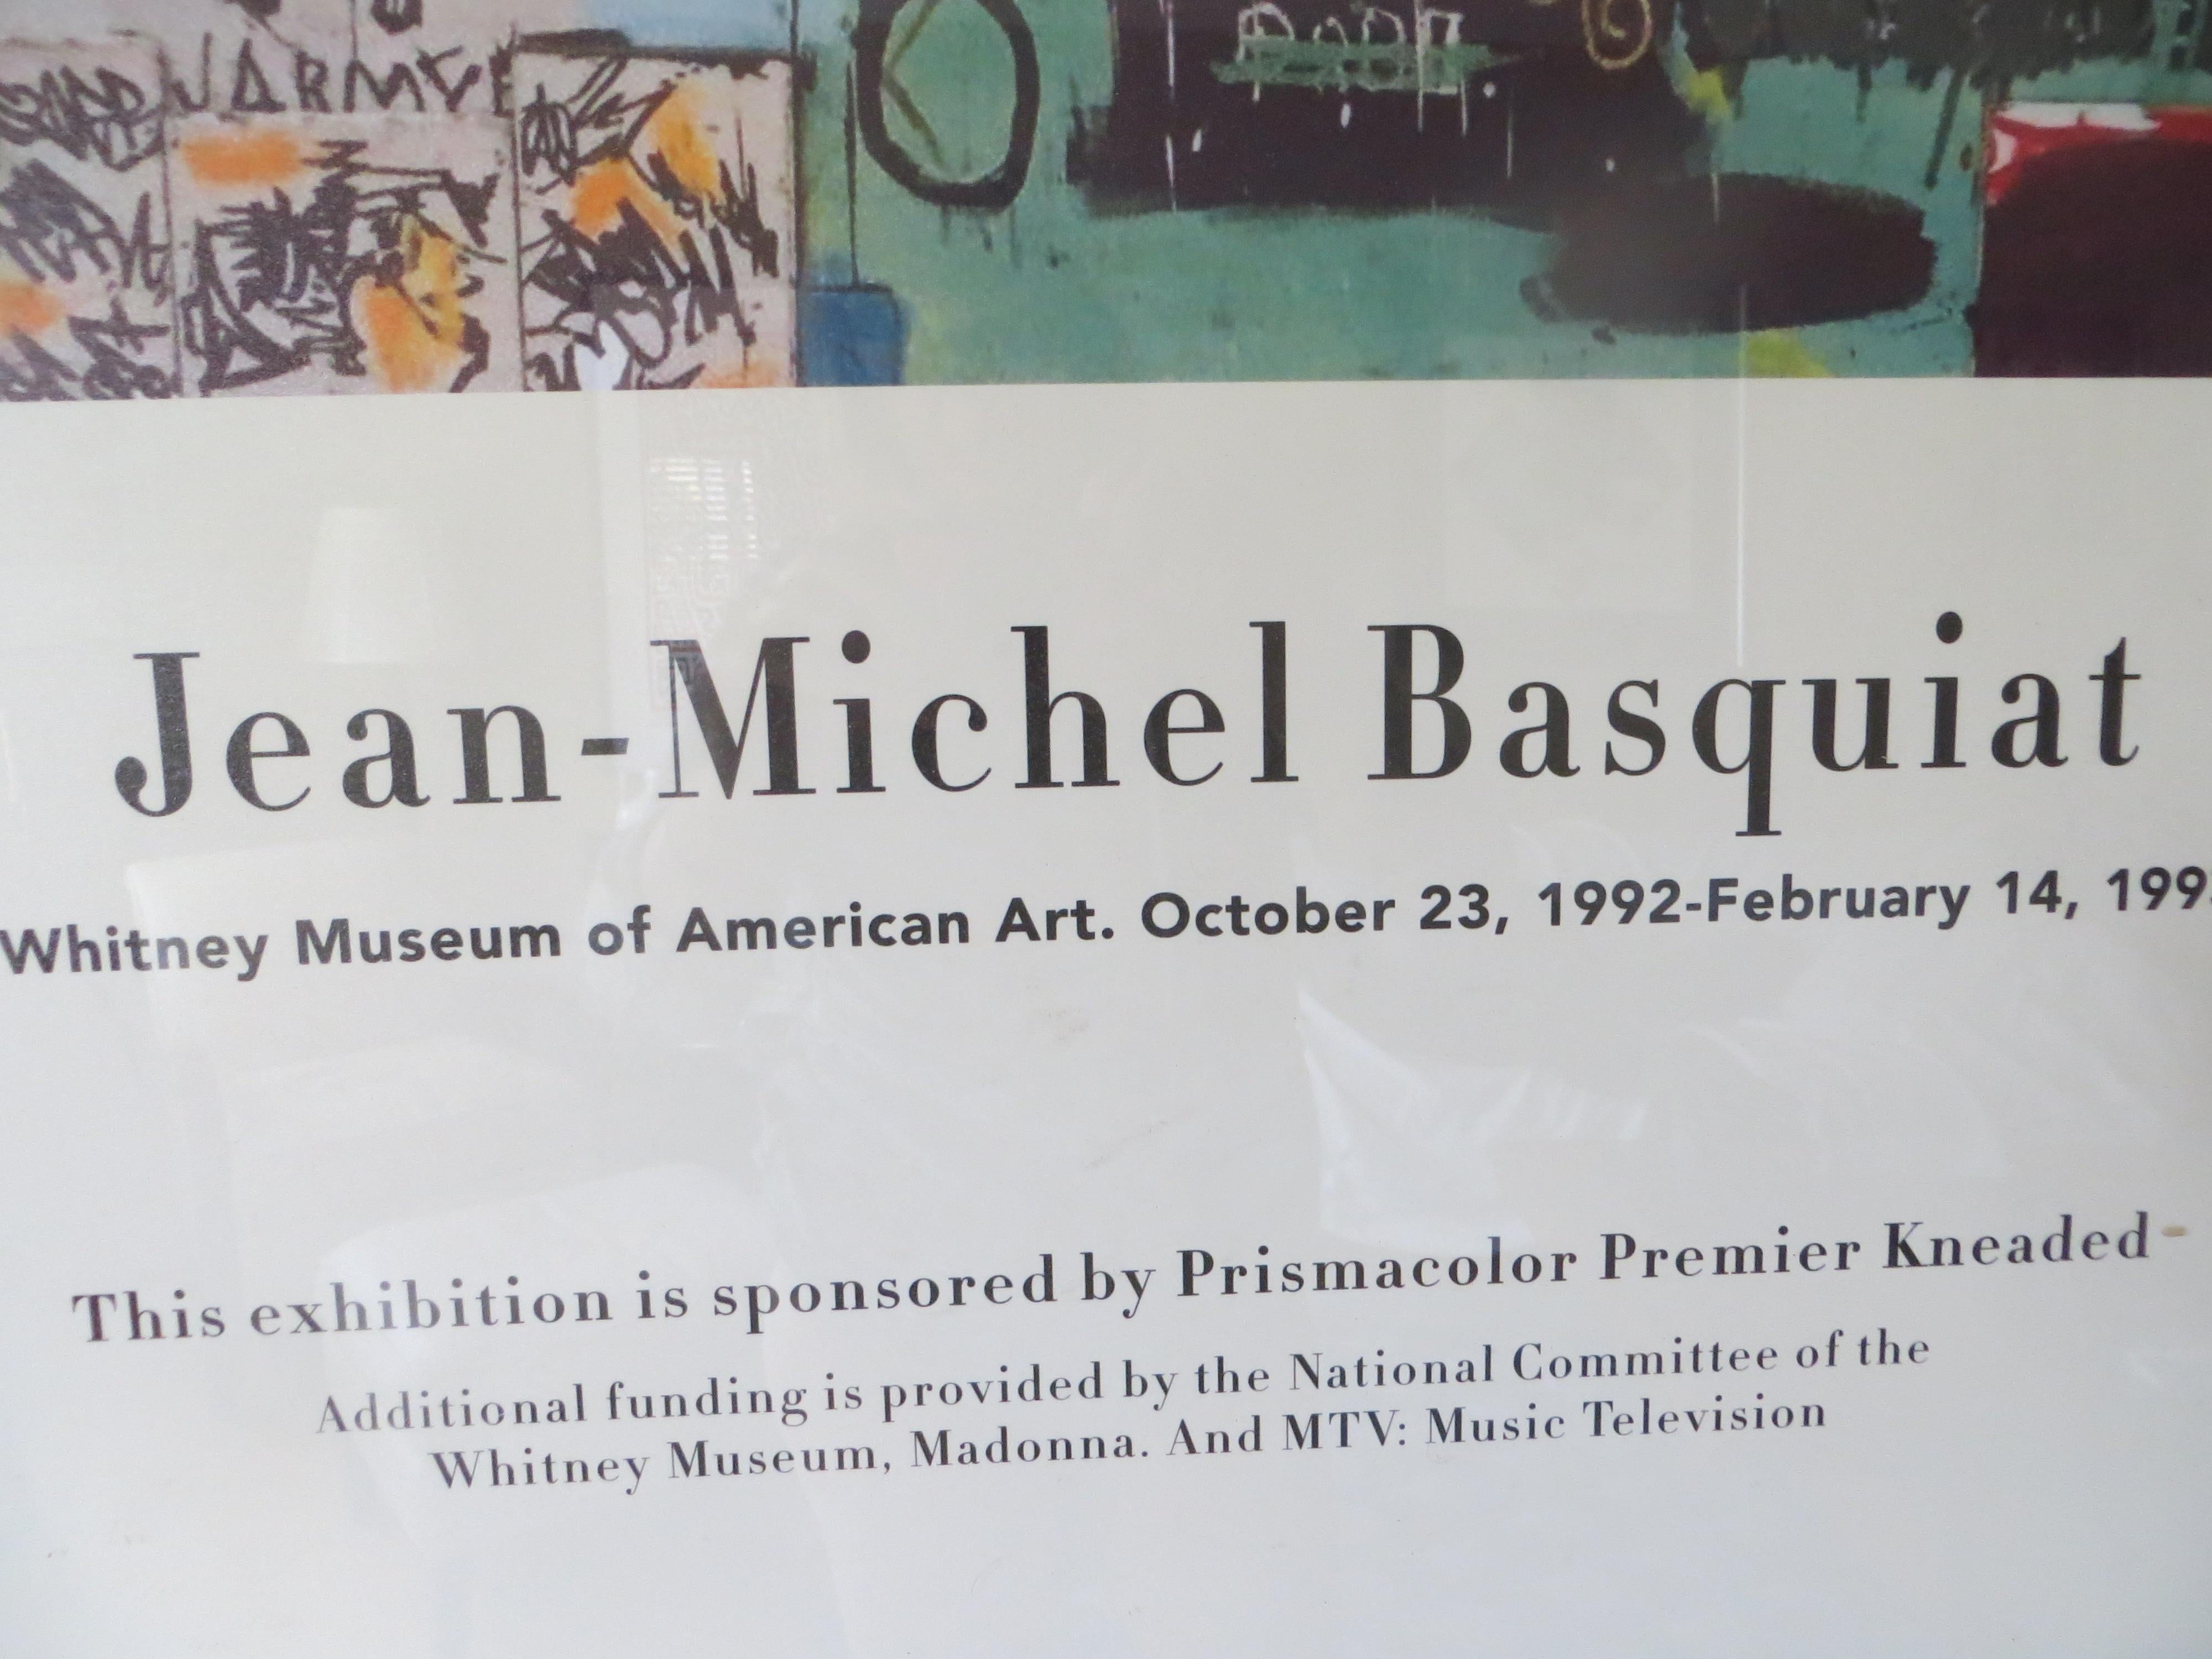  Jean-Michel Basquiat  Exhibition Poster - Street Art Print by (after) Jean-Michel Basquiat